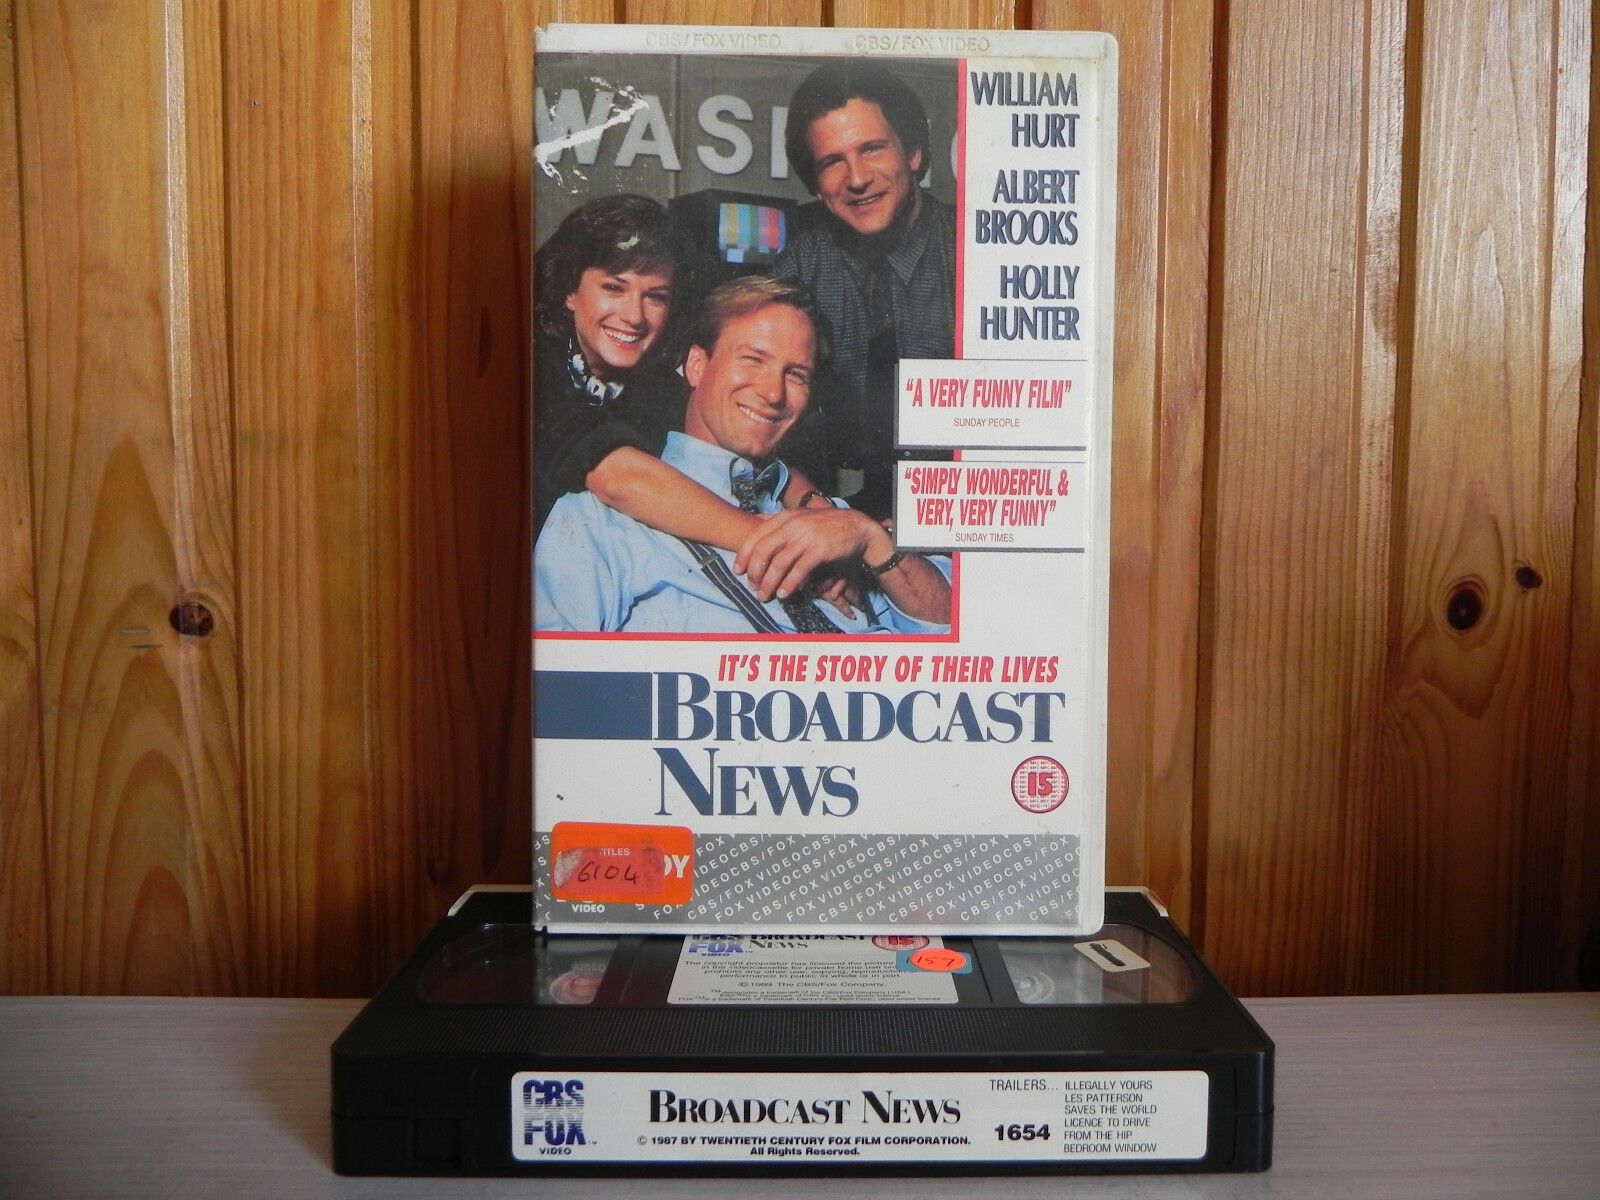 Broadcast News - CBX/FOX - Comedy - William Hurt - Albert Brook - Pal VHS-